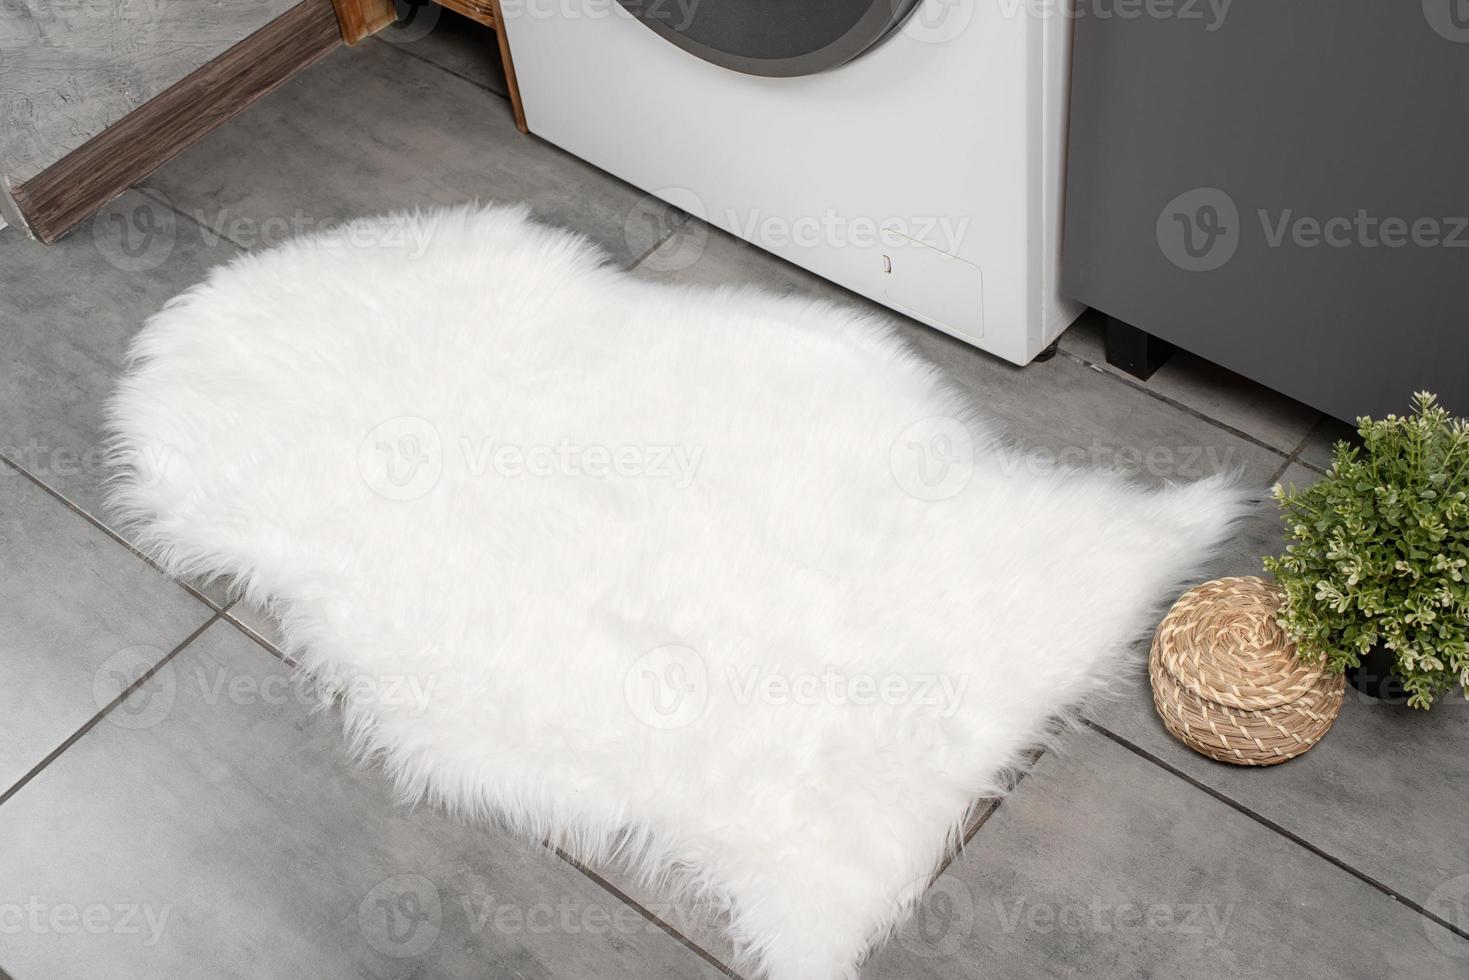 fluffy white rug in ordinary bathroom, mockup design photo